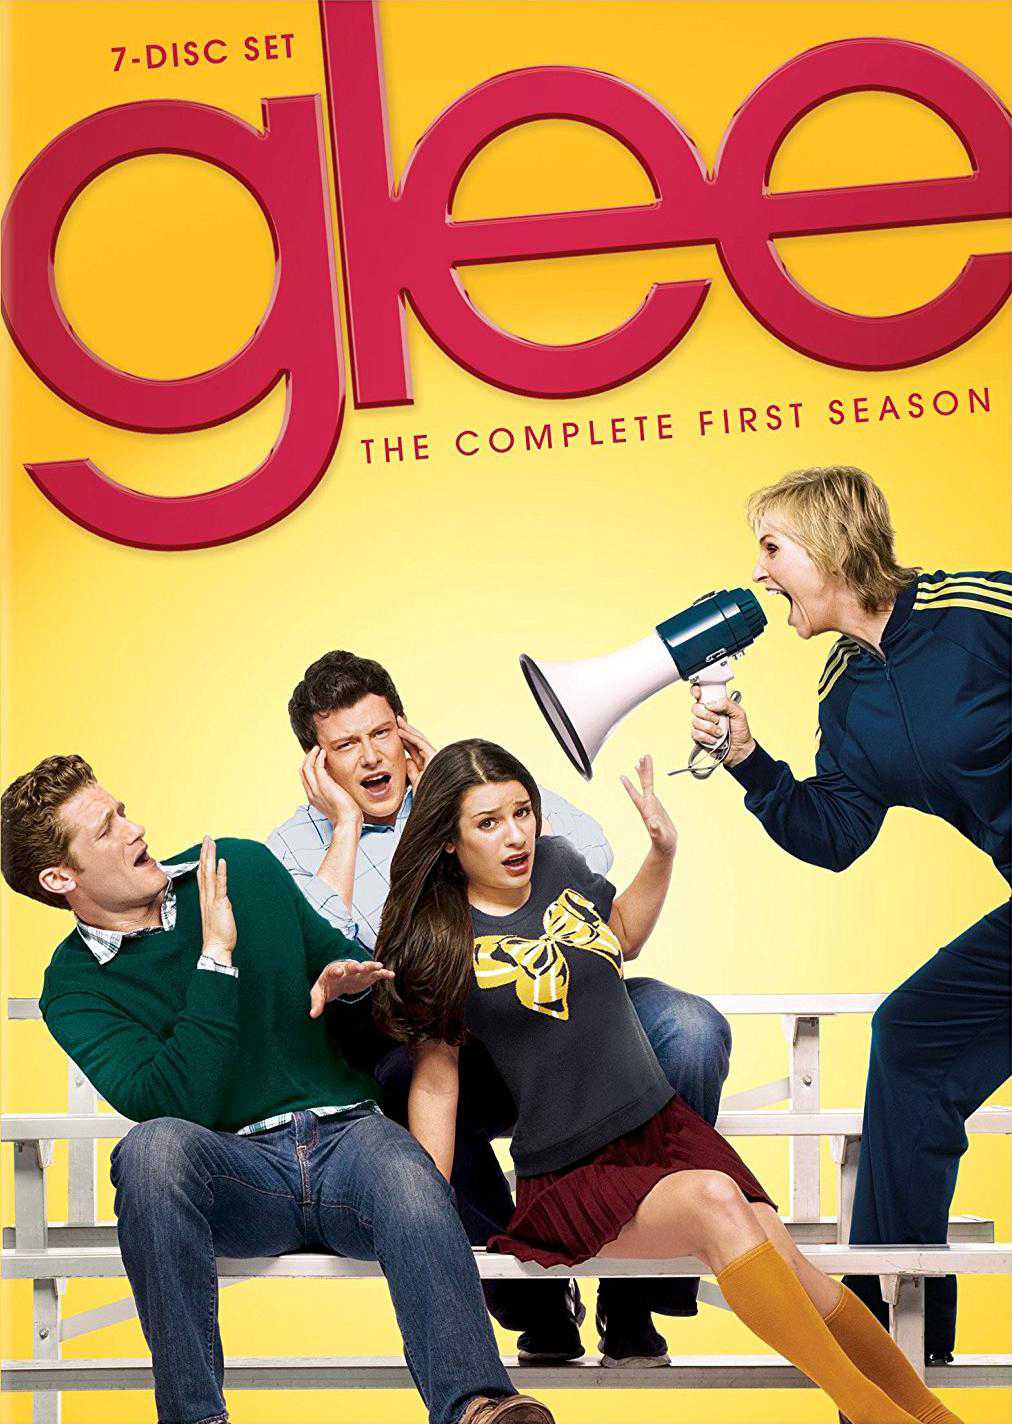 Đội hát trung học 1 - Glee - season 1